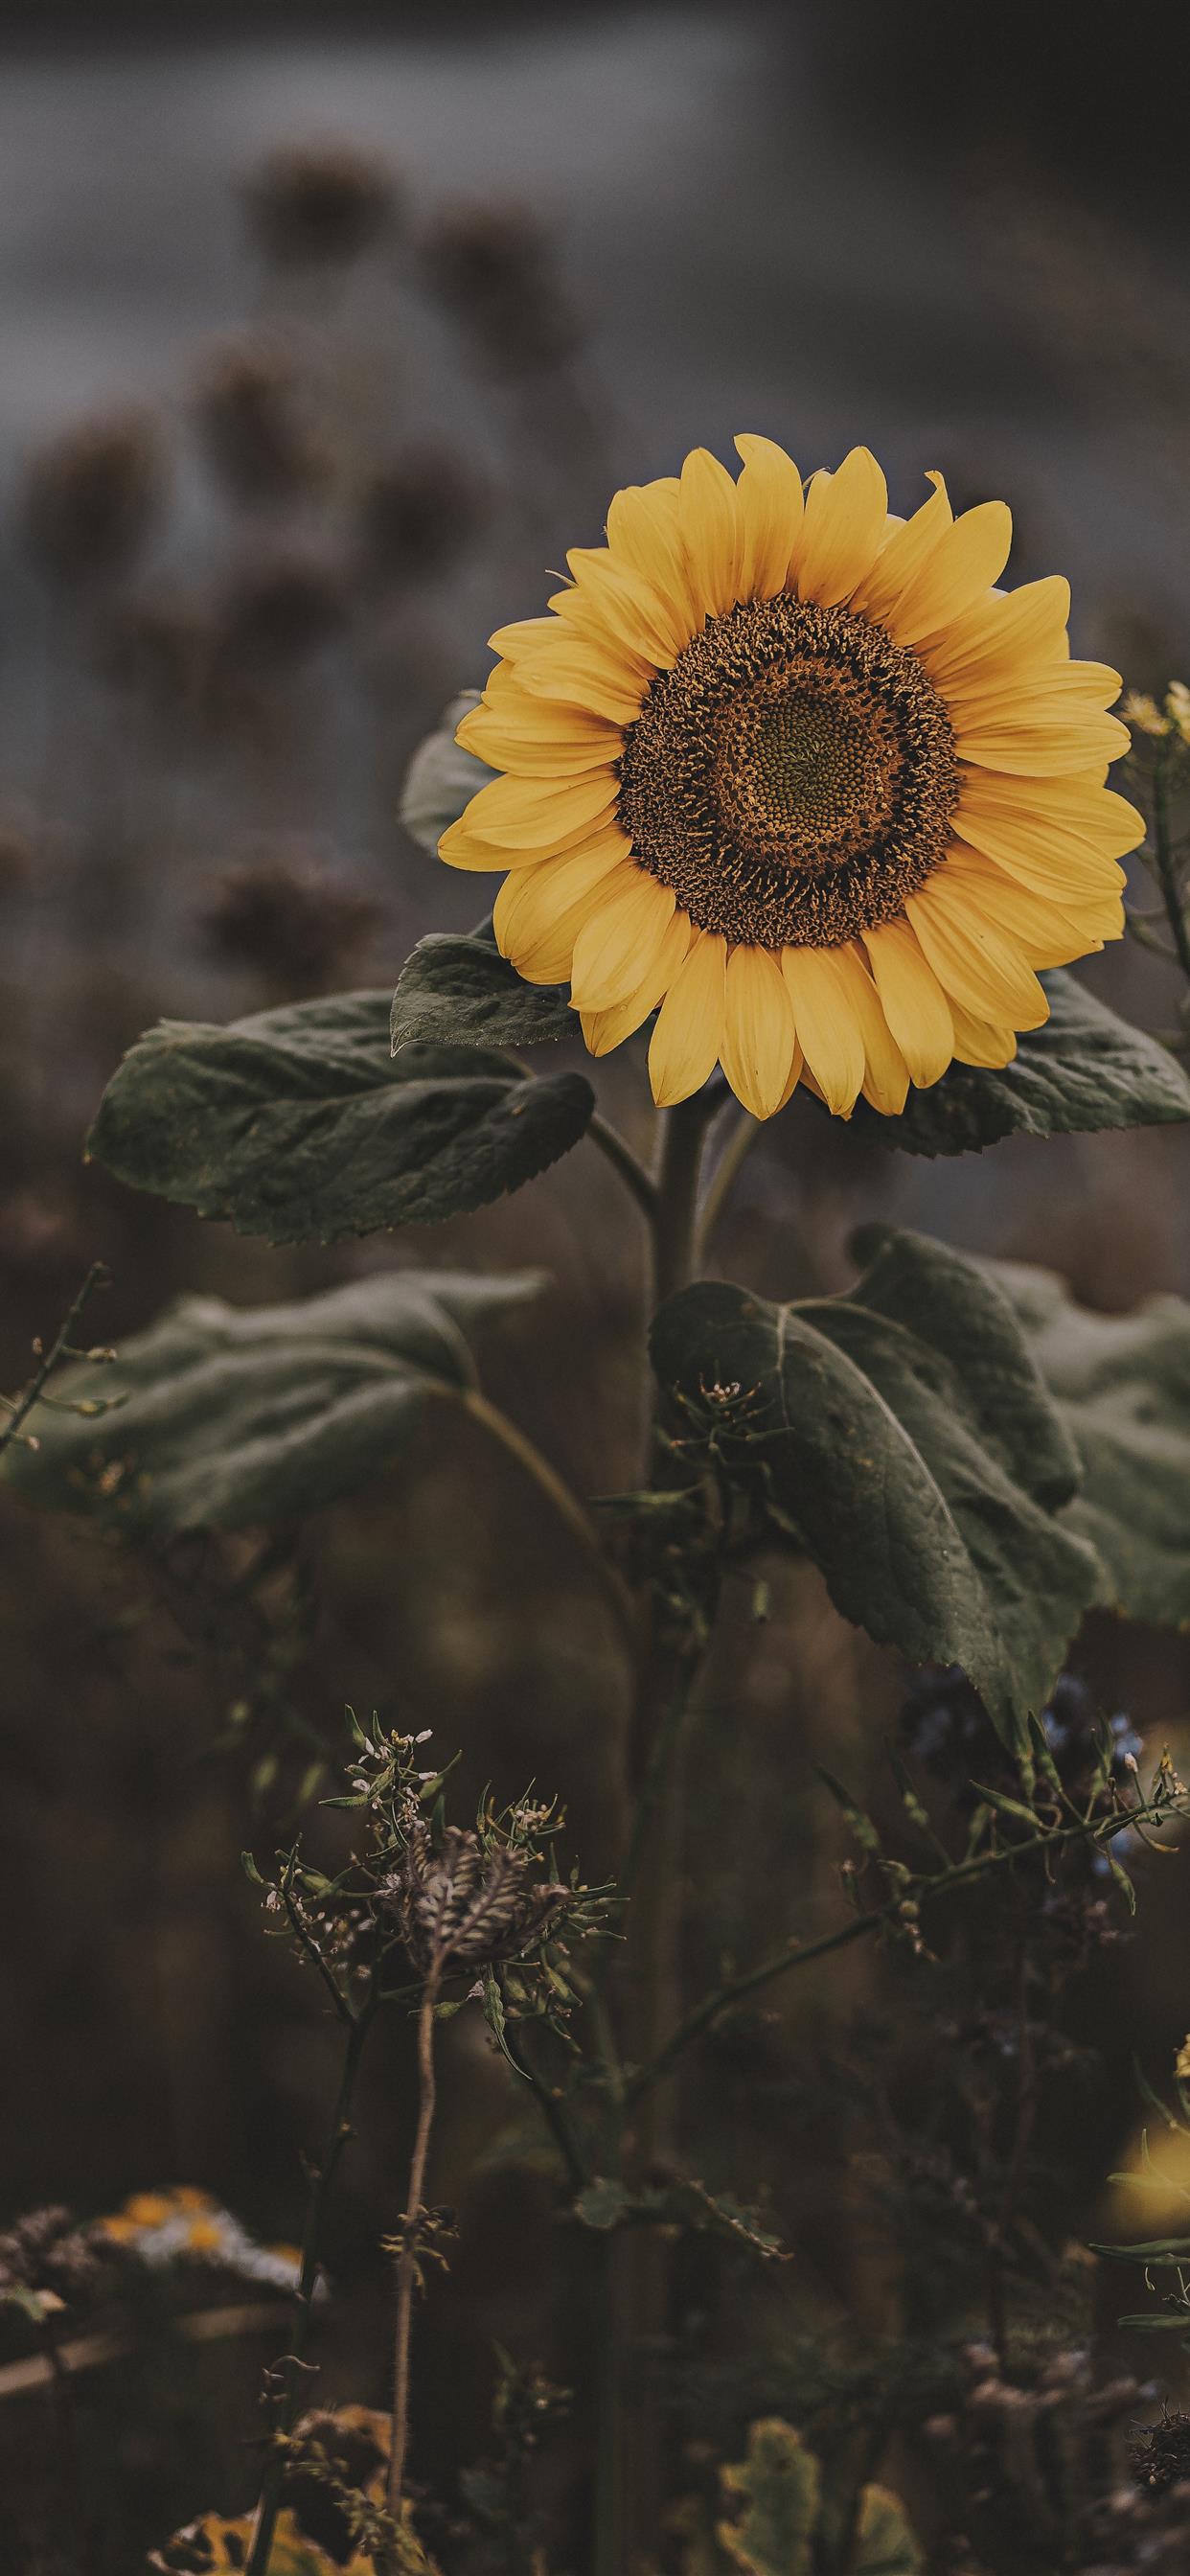 Sunflower iPhone X Wallpaper Free Download